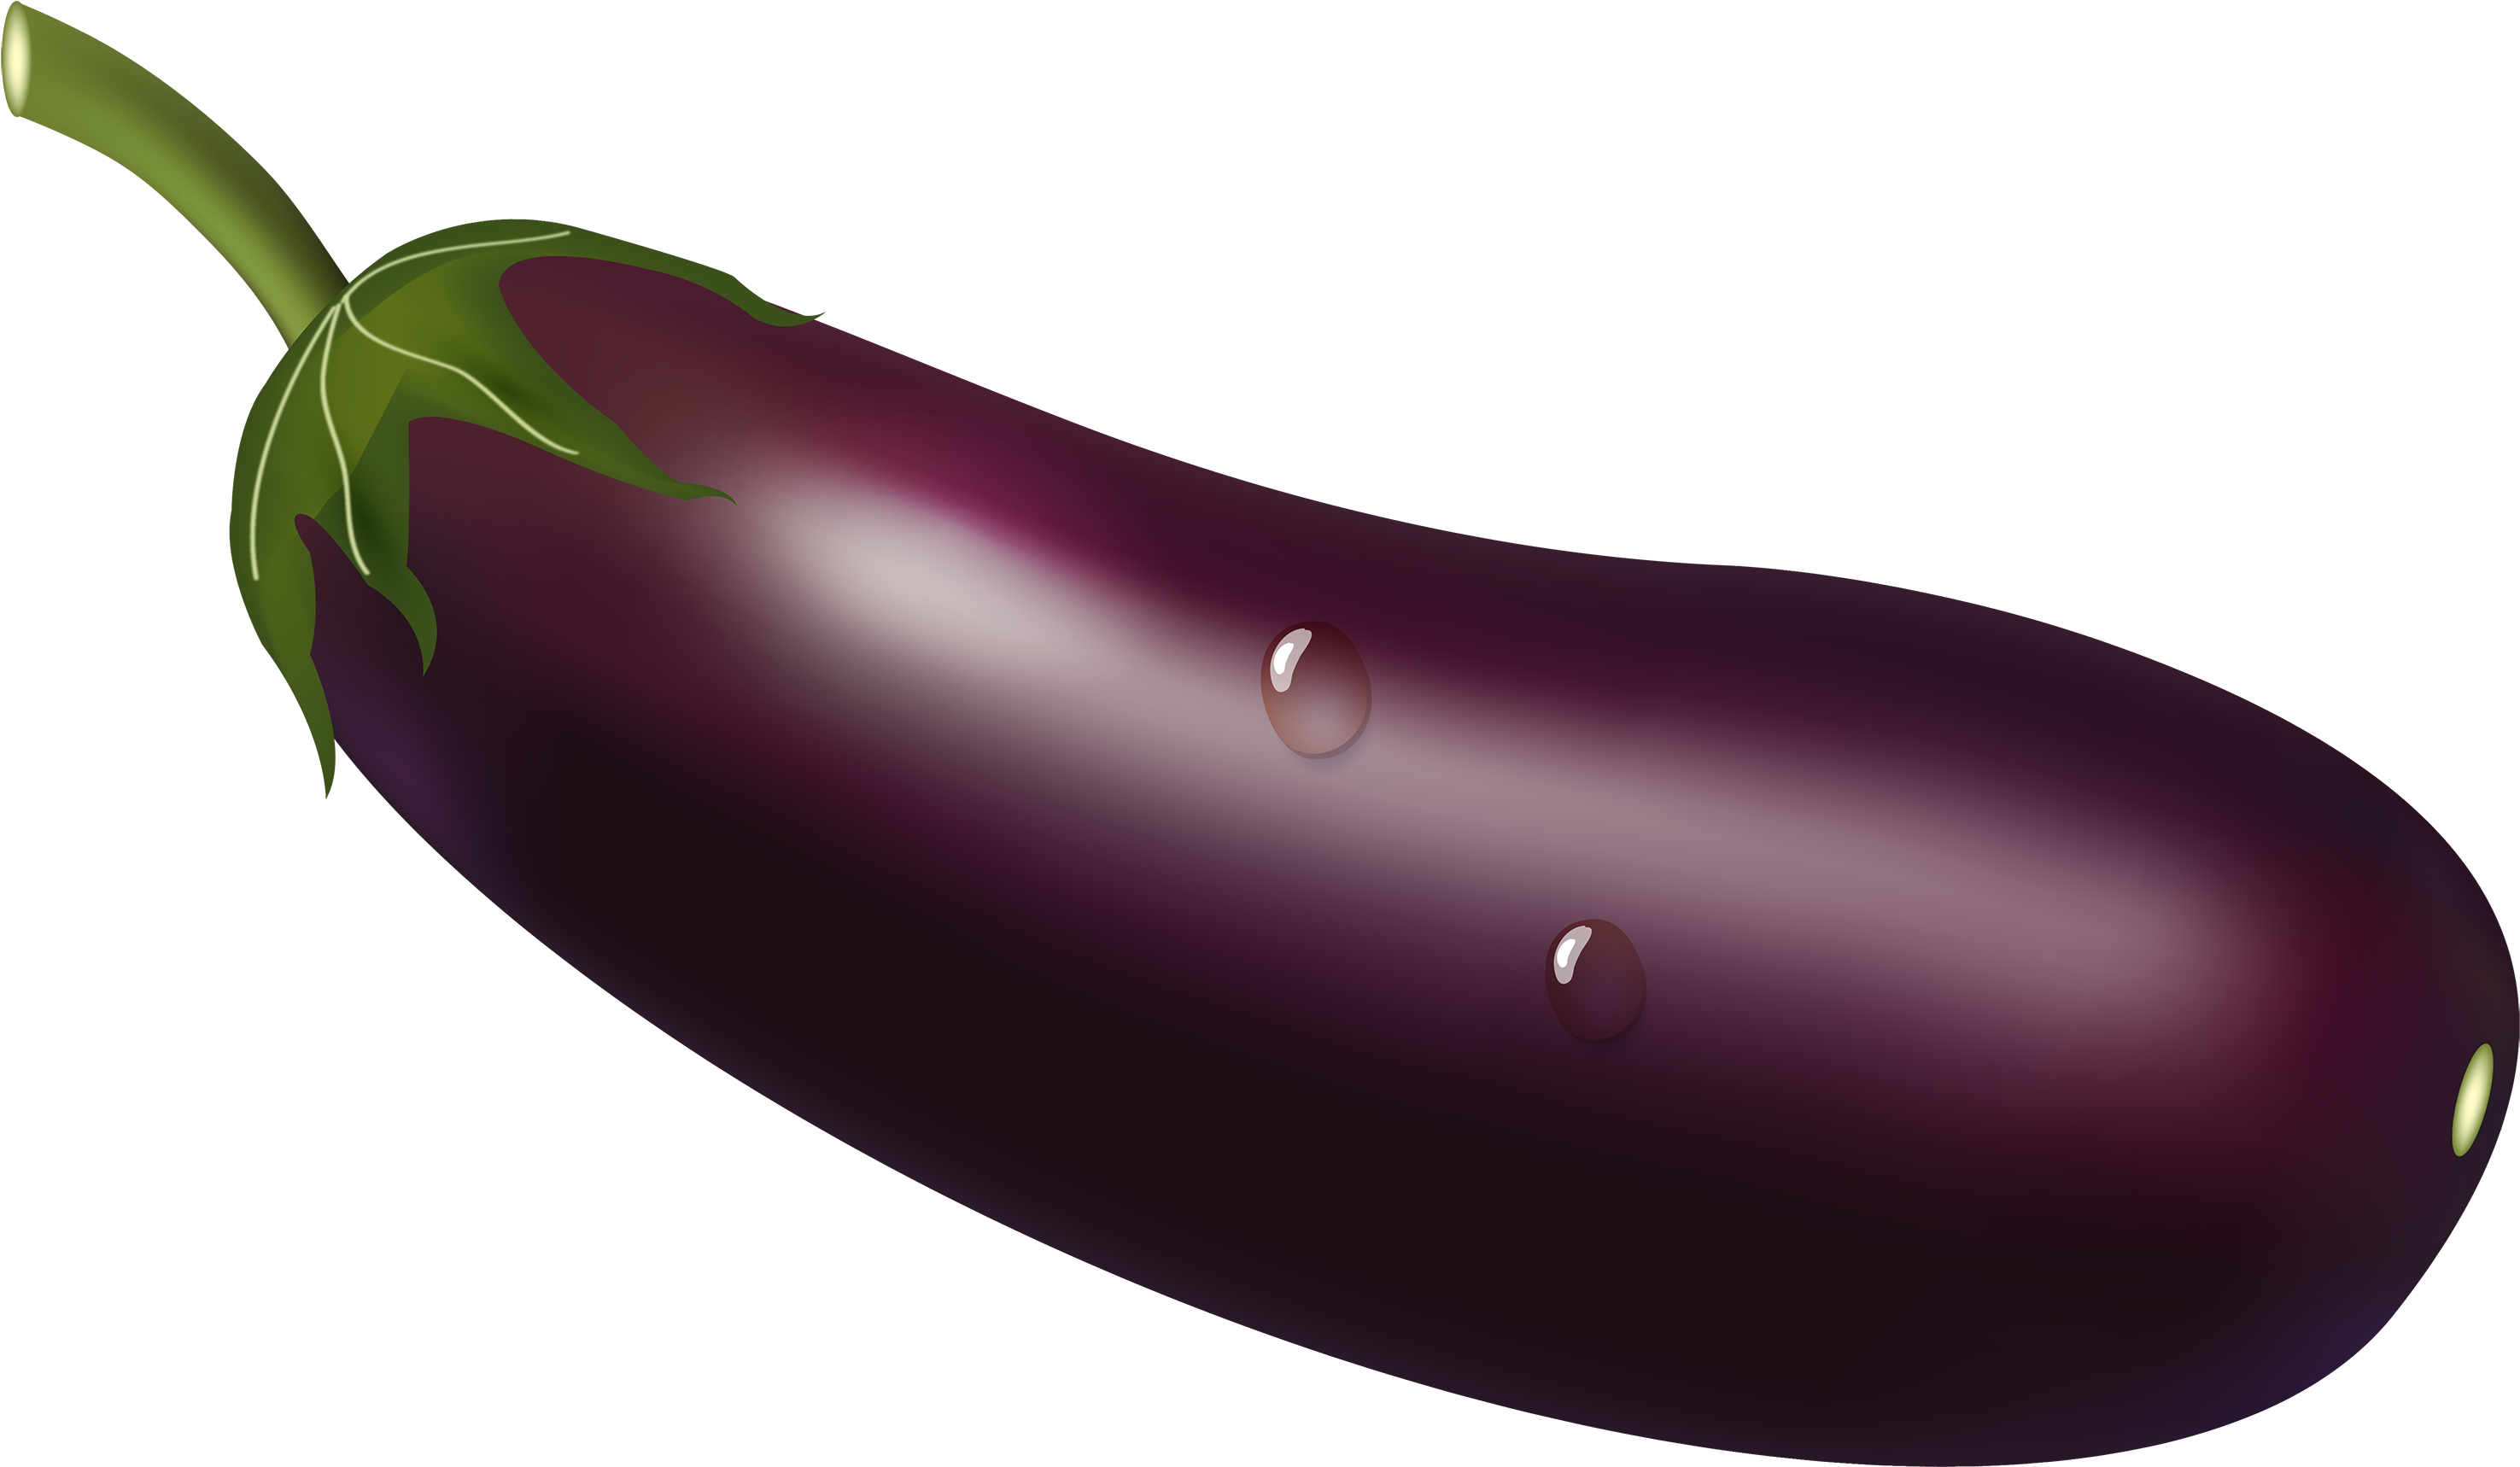 Photos Brinjal Eggplant Free Download Image PNG Image